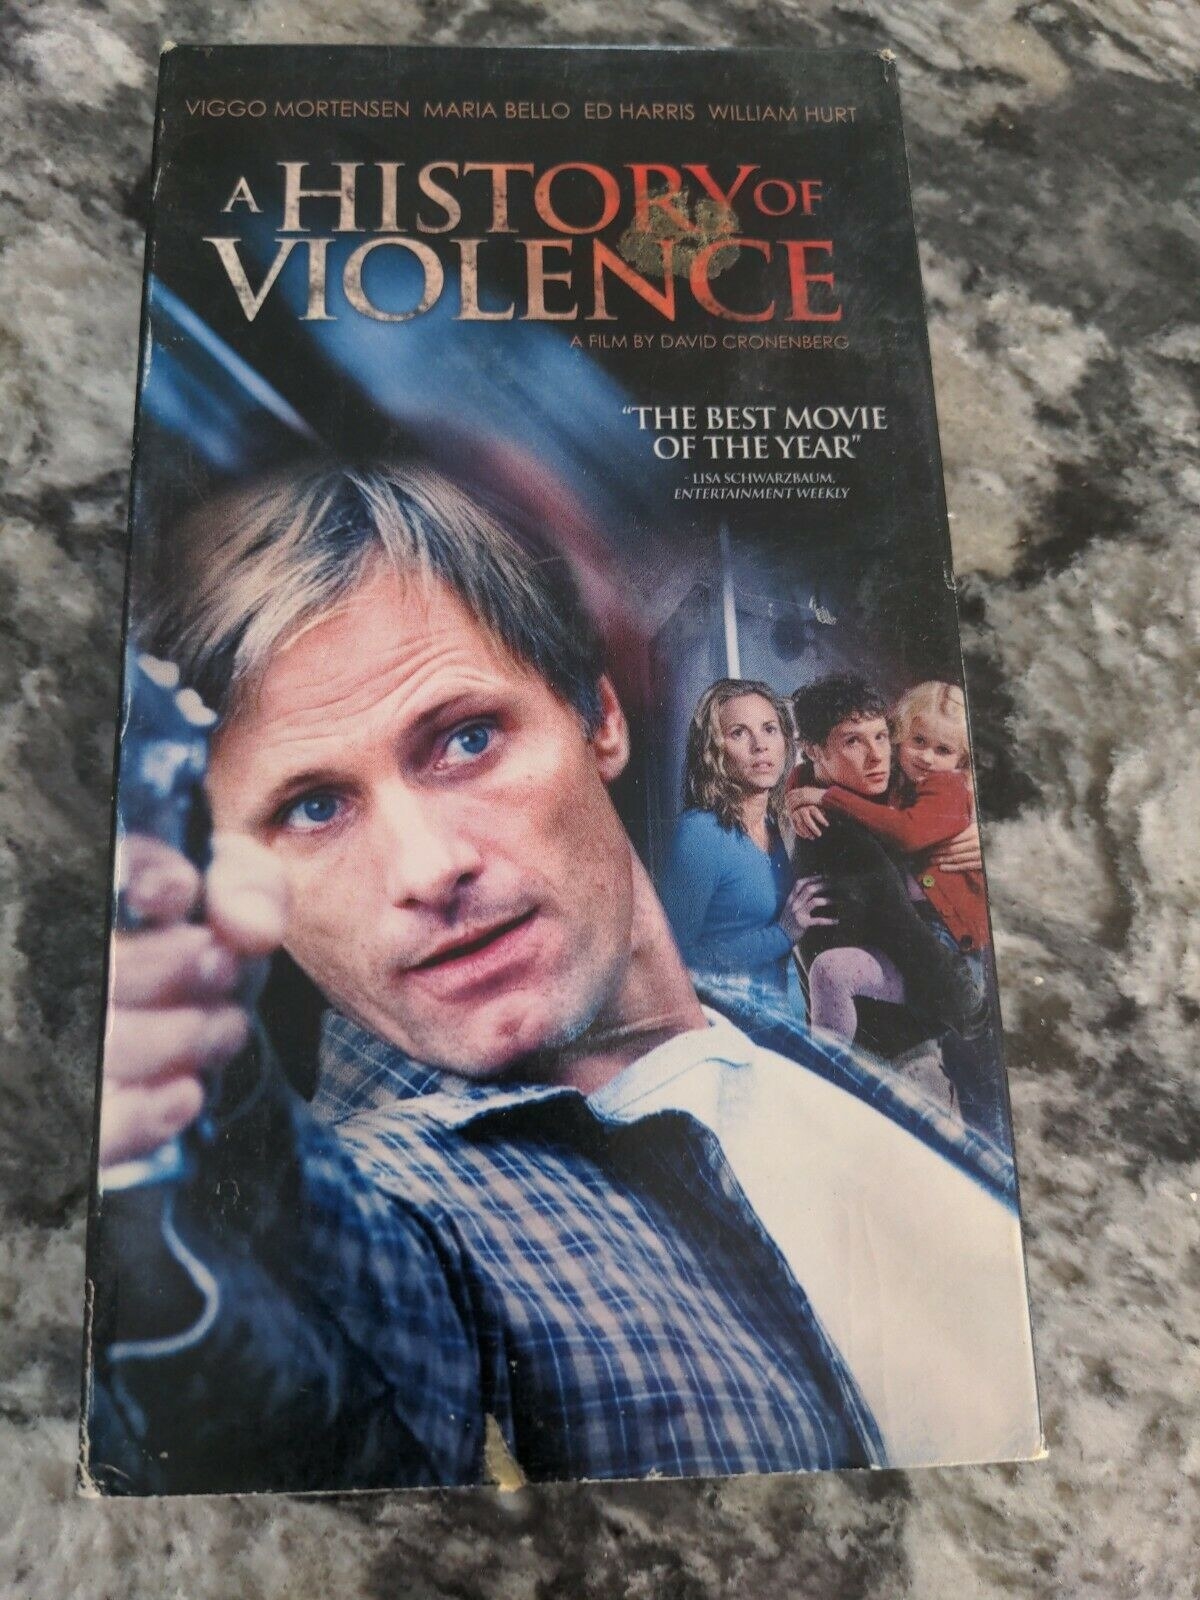 A VHS copy of A History of Violence